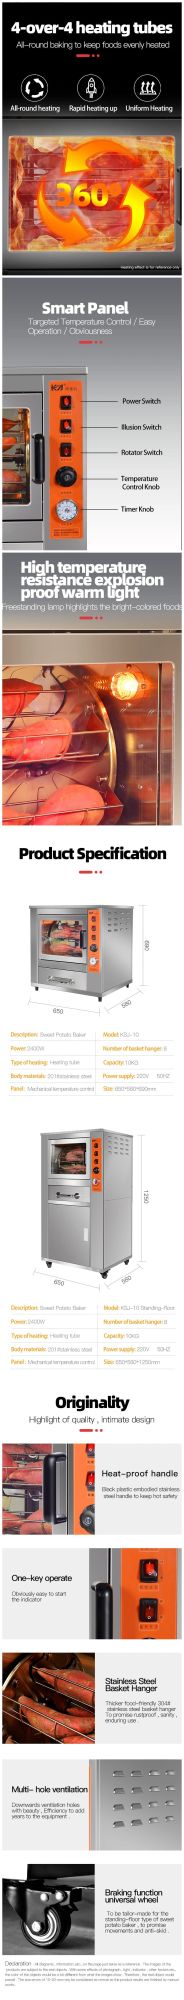 Ksj-10 2022 New Samll Size Portable Sweet Potato Taro Baking Oven Kitchen Equipment Appliance Corn Roaster Bakery Machine